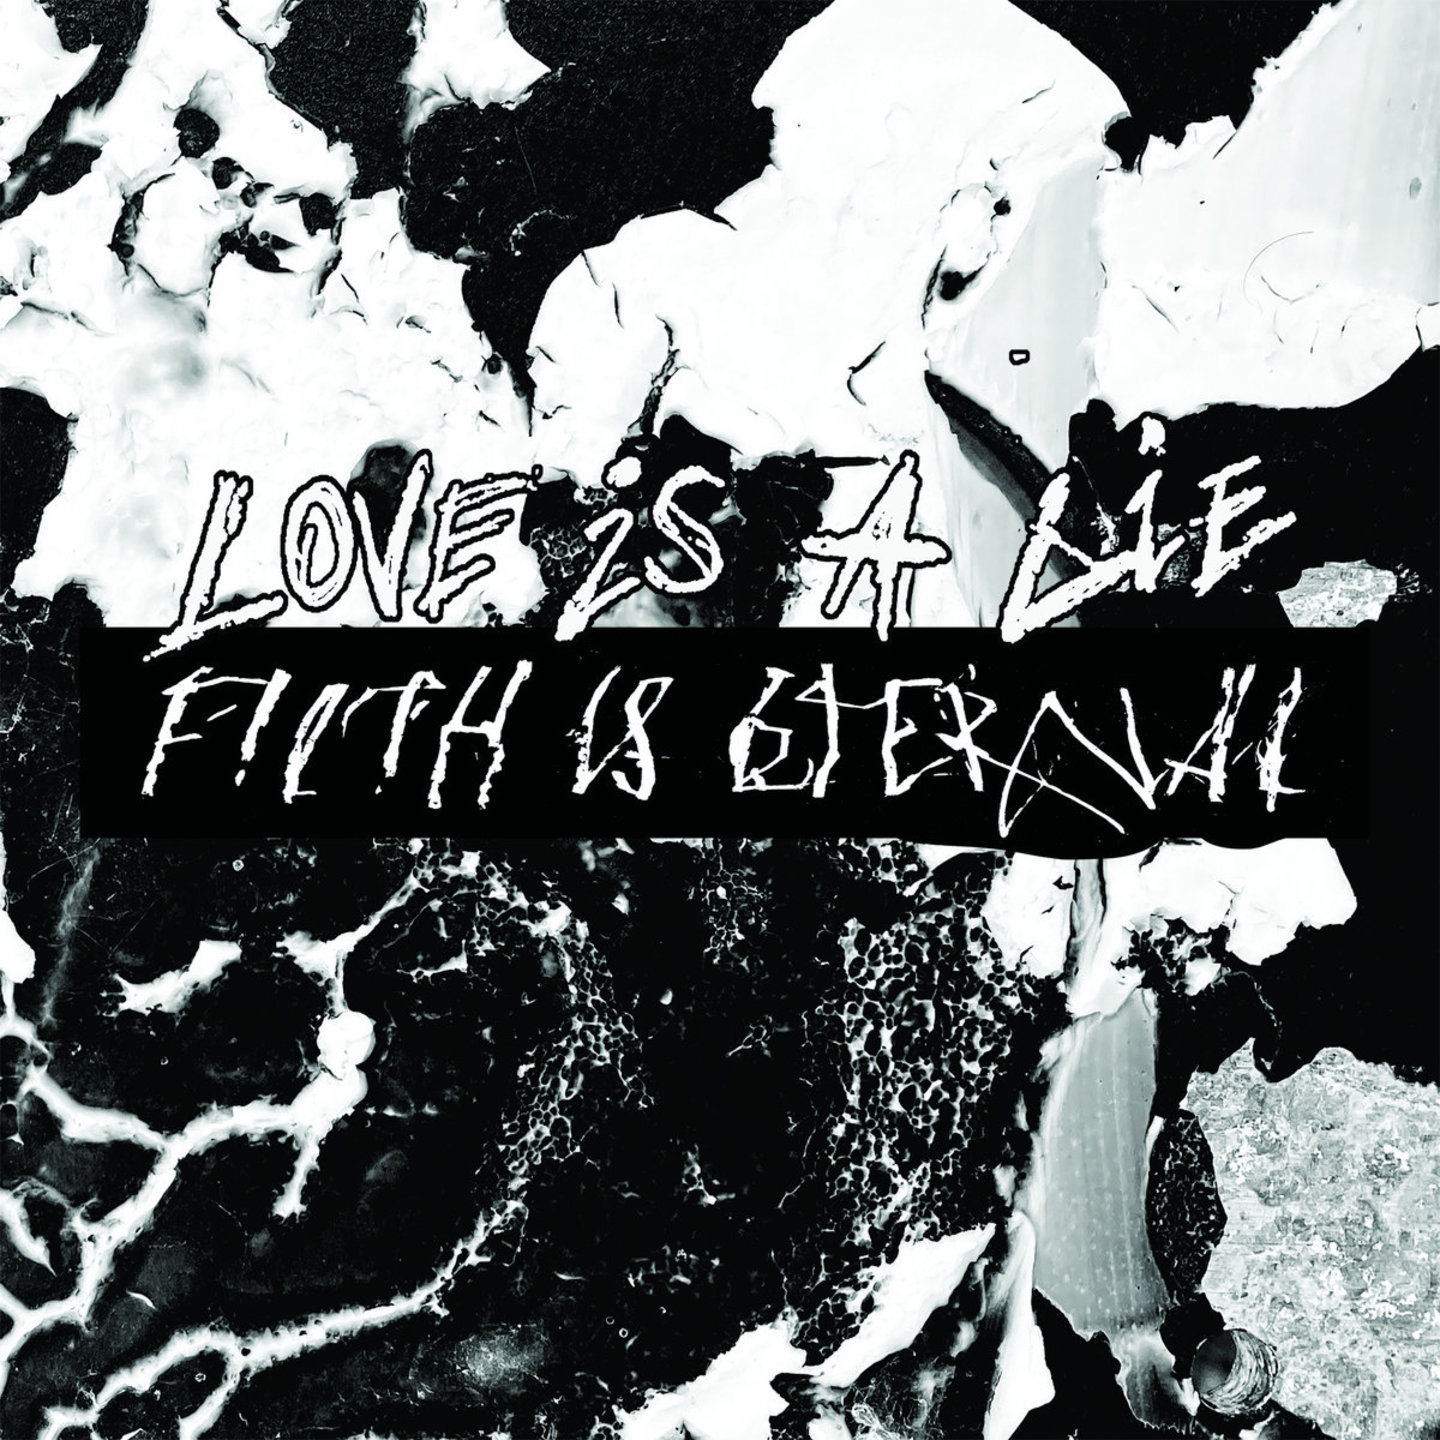 FILTH IS ETERNAL - Love Is A Lie, Filth Is Eternal LP Lime w White Splatter Vinyl